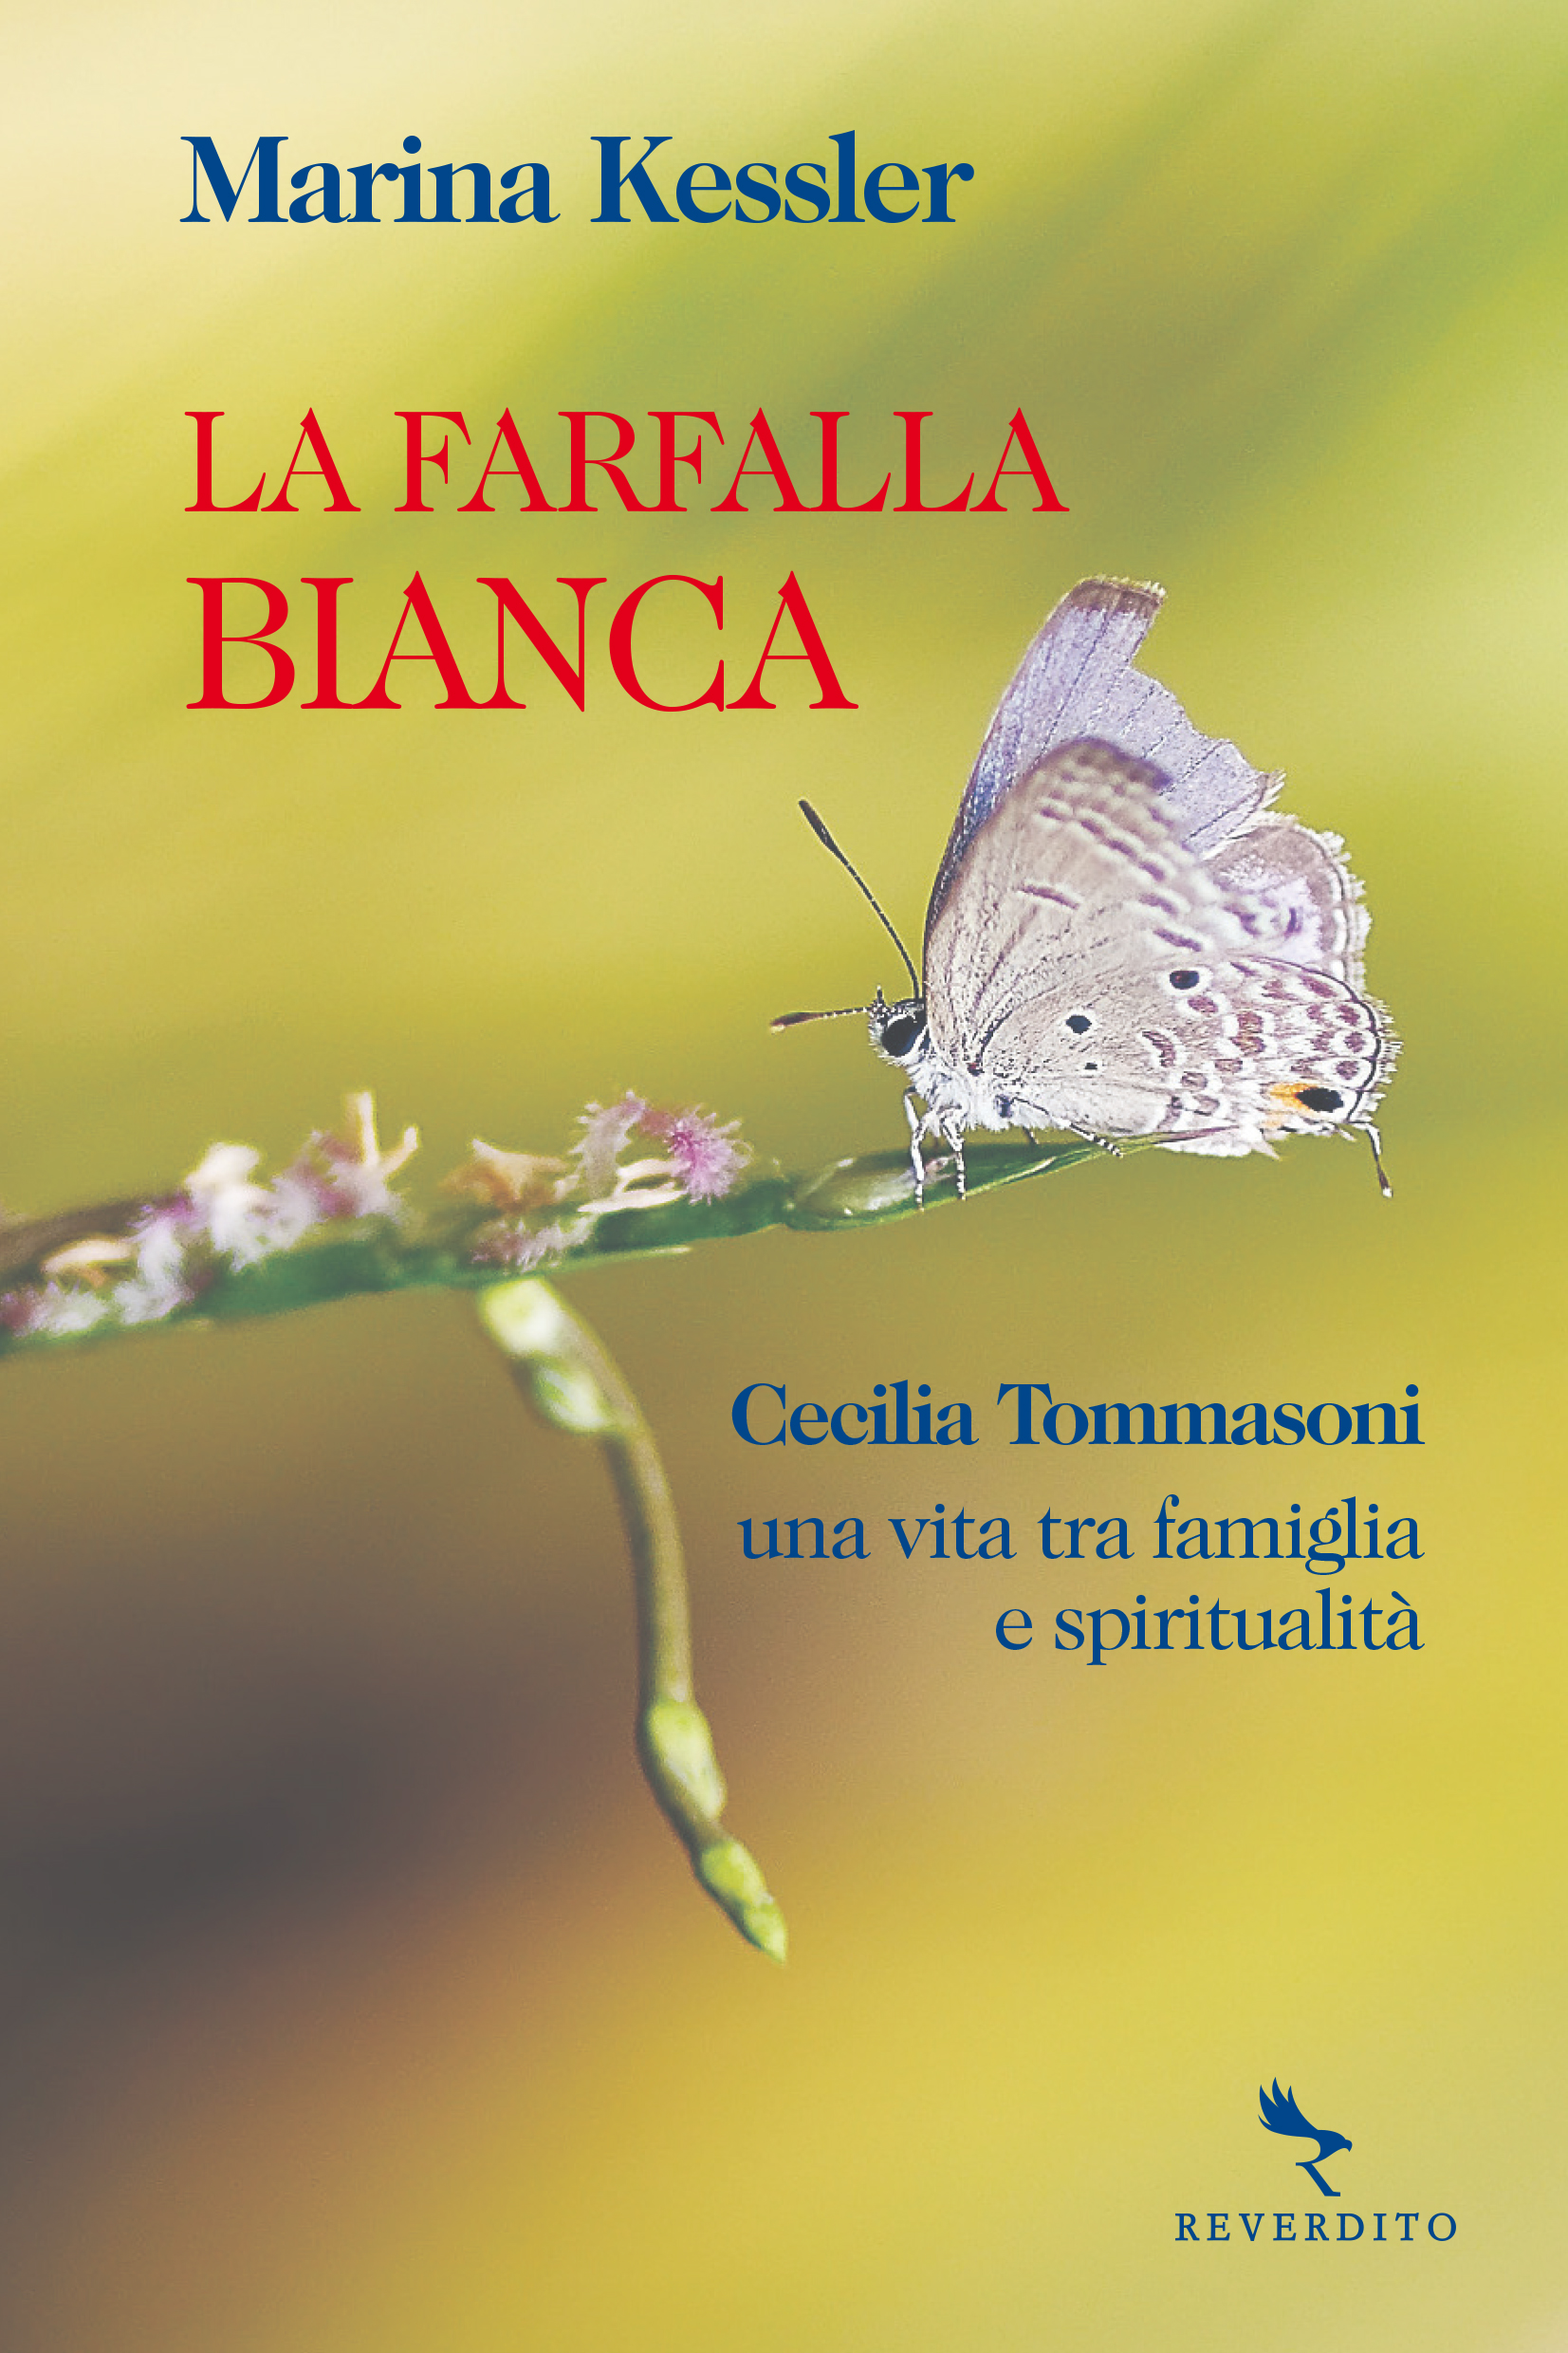 Marina Kessler presenta il romanzo biografico La farfalla bianca